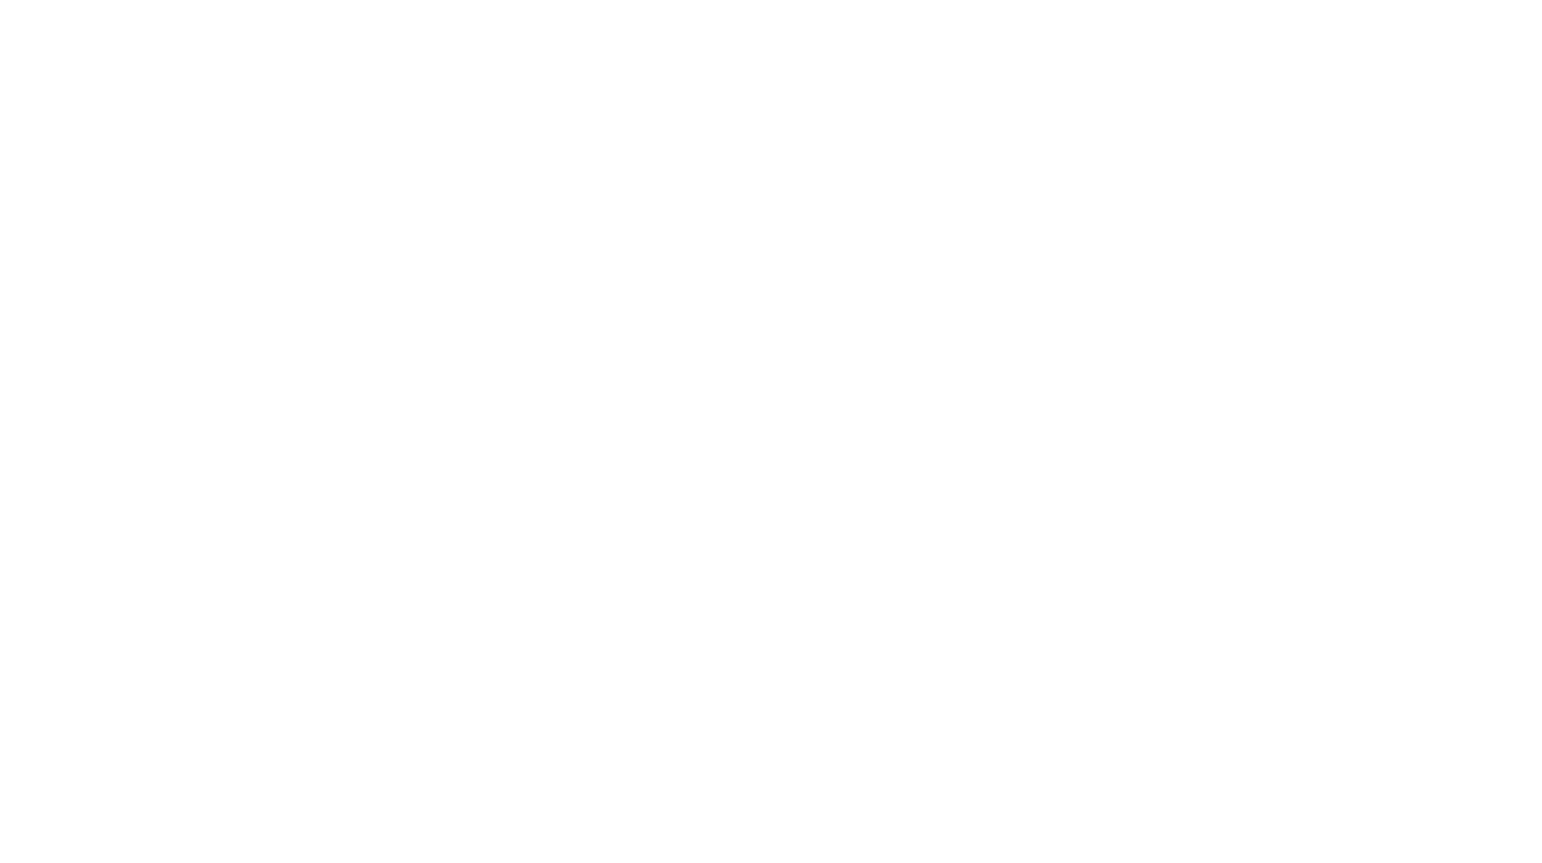 Técnicas Reunidas logo large for dark backgrounds (transparent PNG)